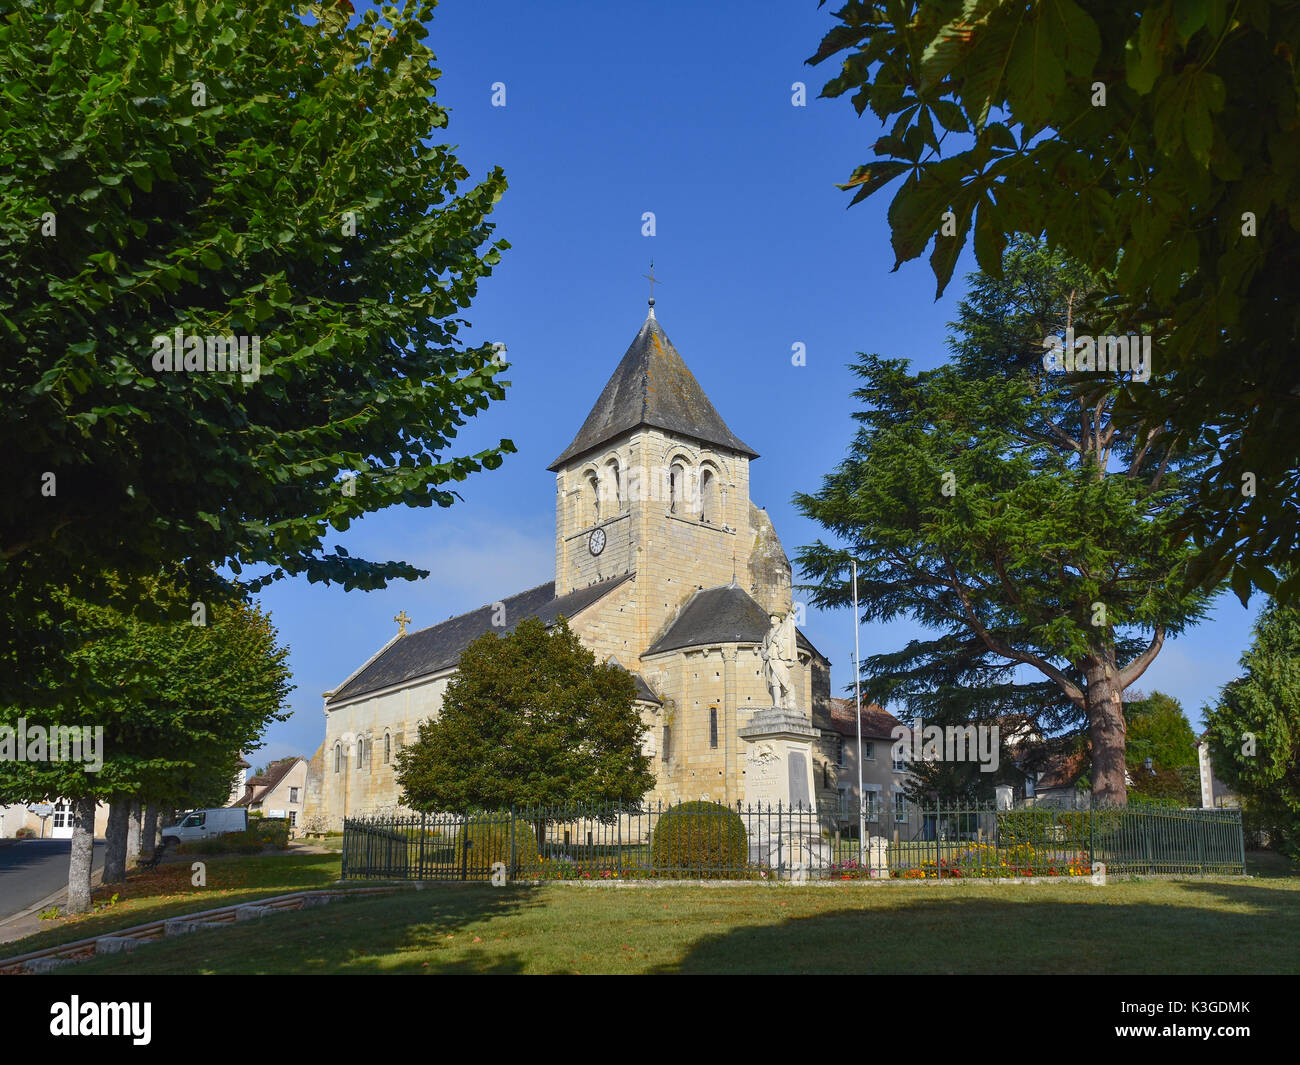 Village church, Bossay-sur-Claise, France. Stock Photo